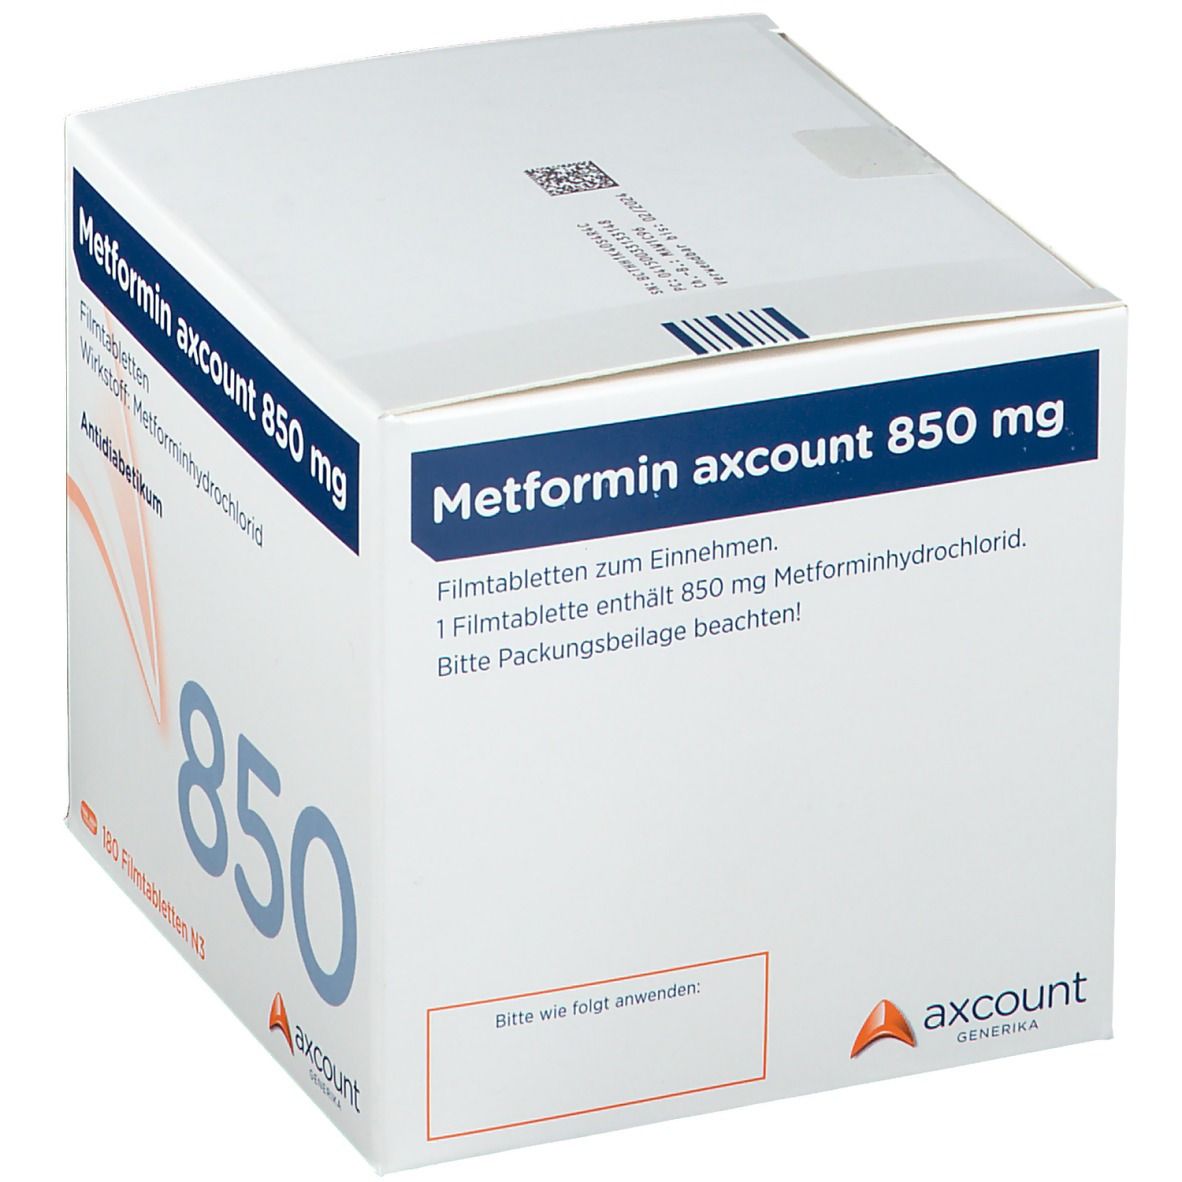 Metformin axcount 850 mg